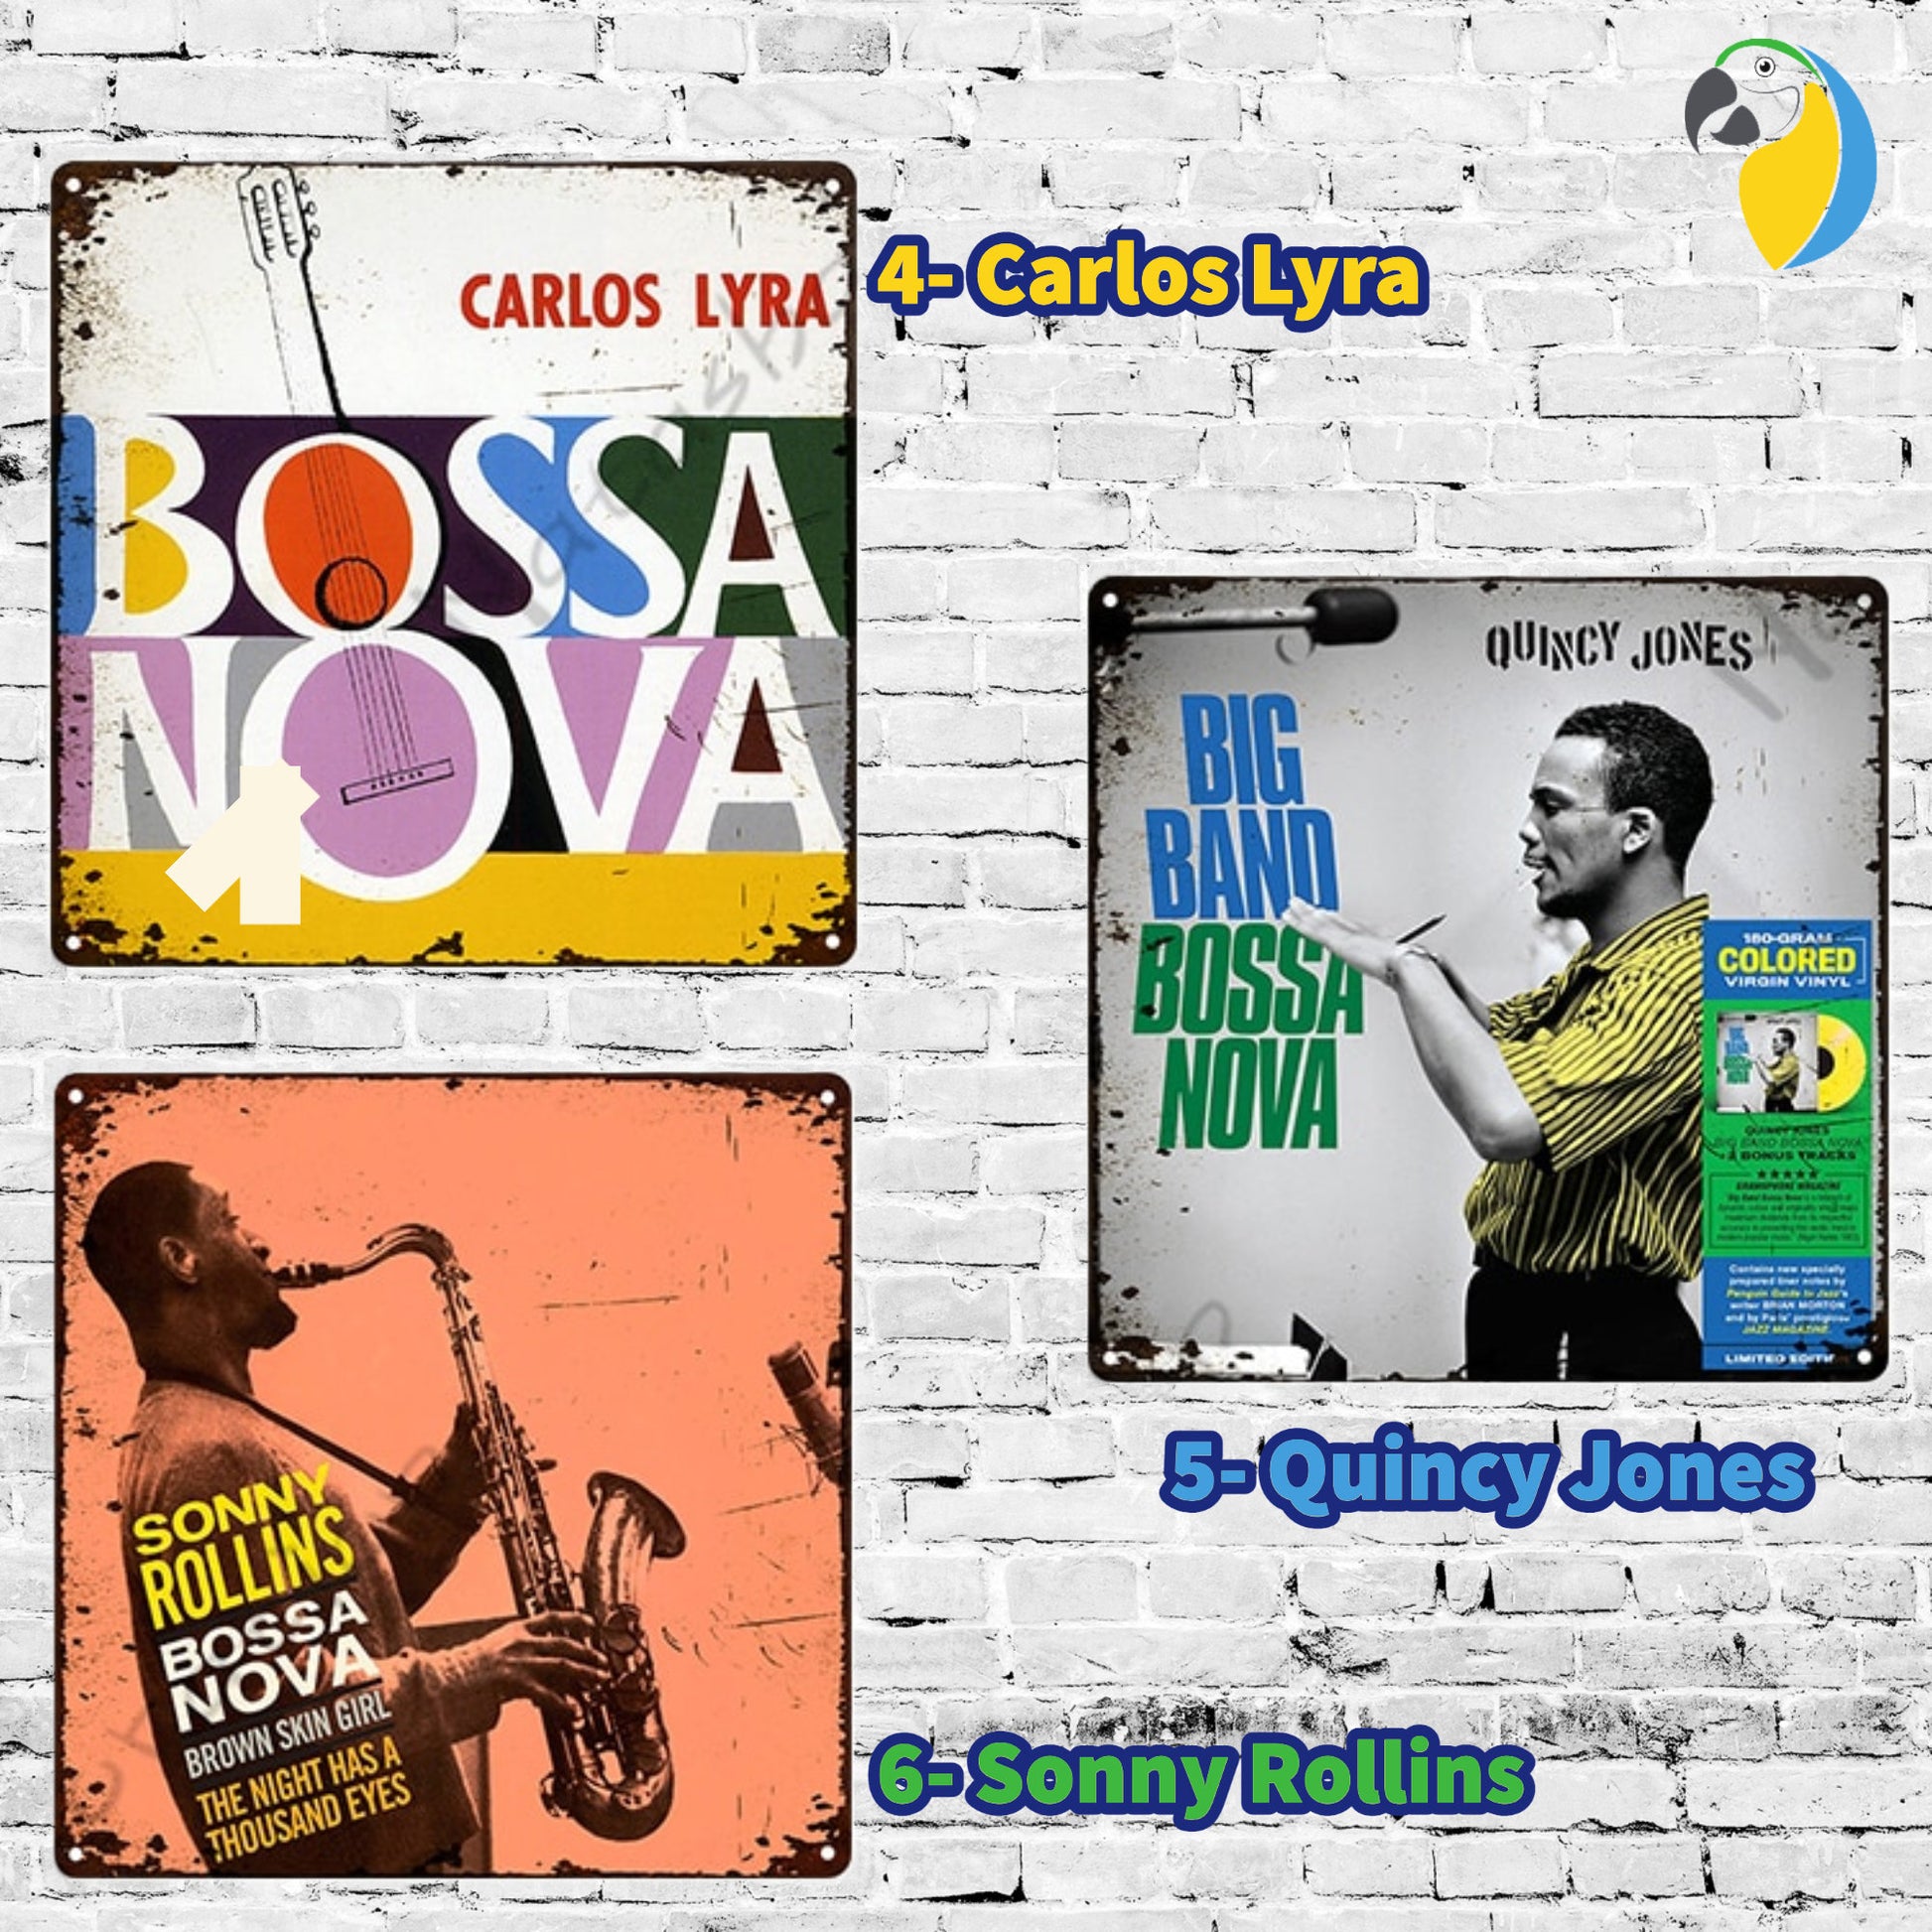 Bossa Nova Metal Sign | Brazilian 50s Music Rusty Square Tin Poster | Brazil Jazz Vintage Print Plaque For Bar Club Cafe & Wall Decor | Papagaio Studio Etsy Shop